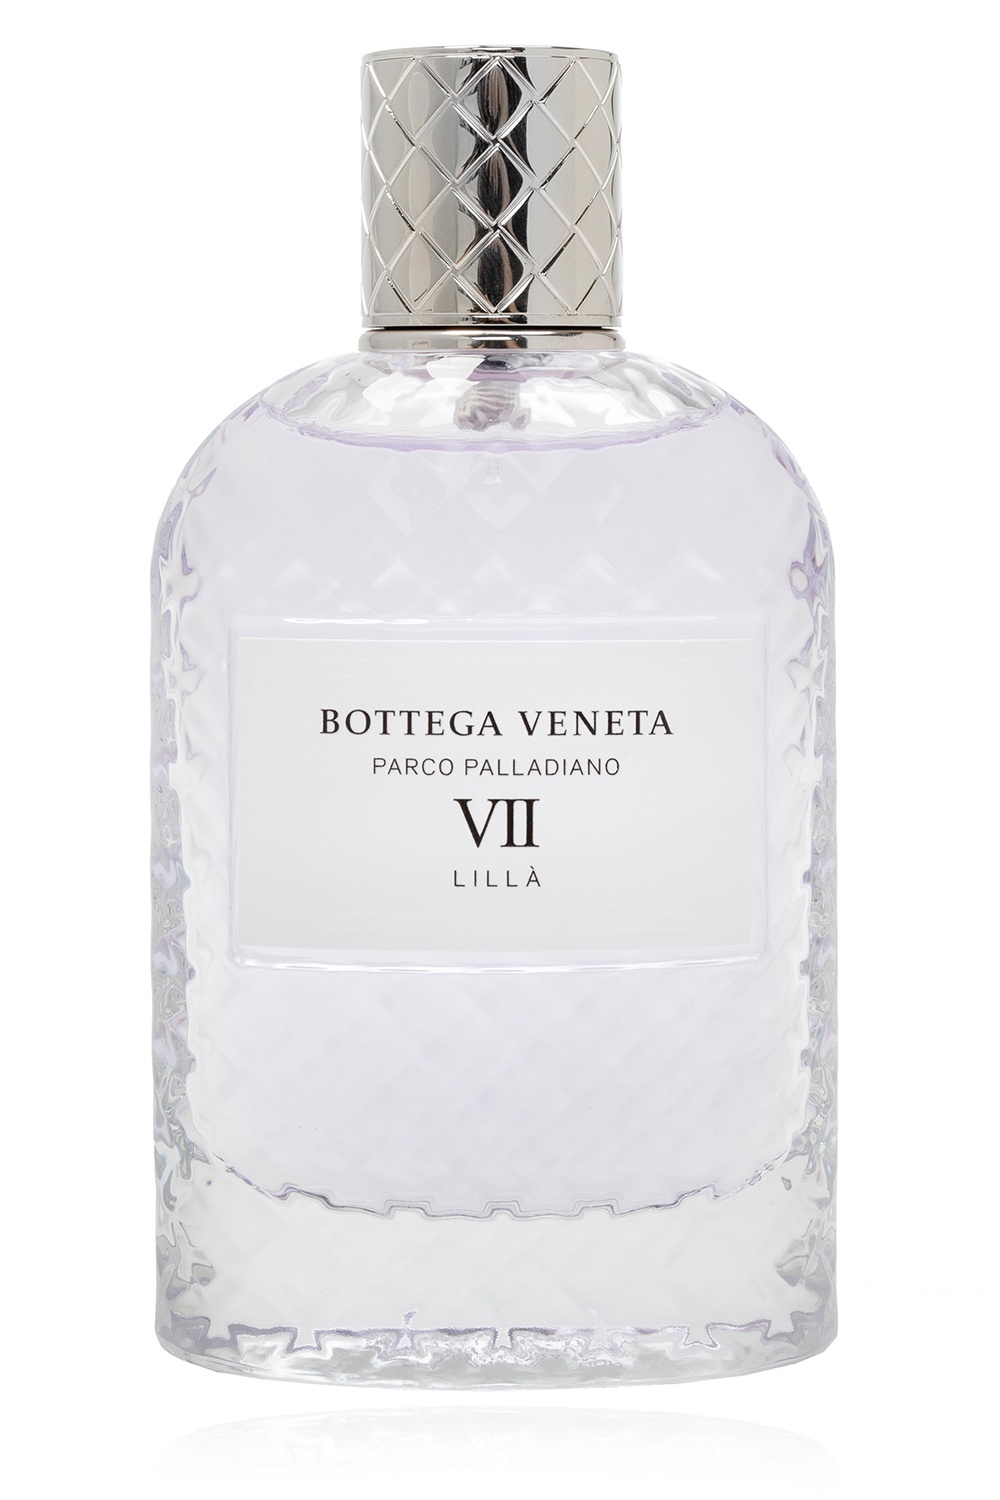 Bottega Veneta ‘Parco Palladiano VII Lilla’ eau de parfum